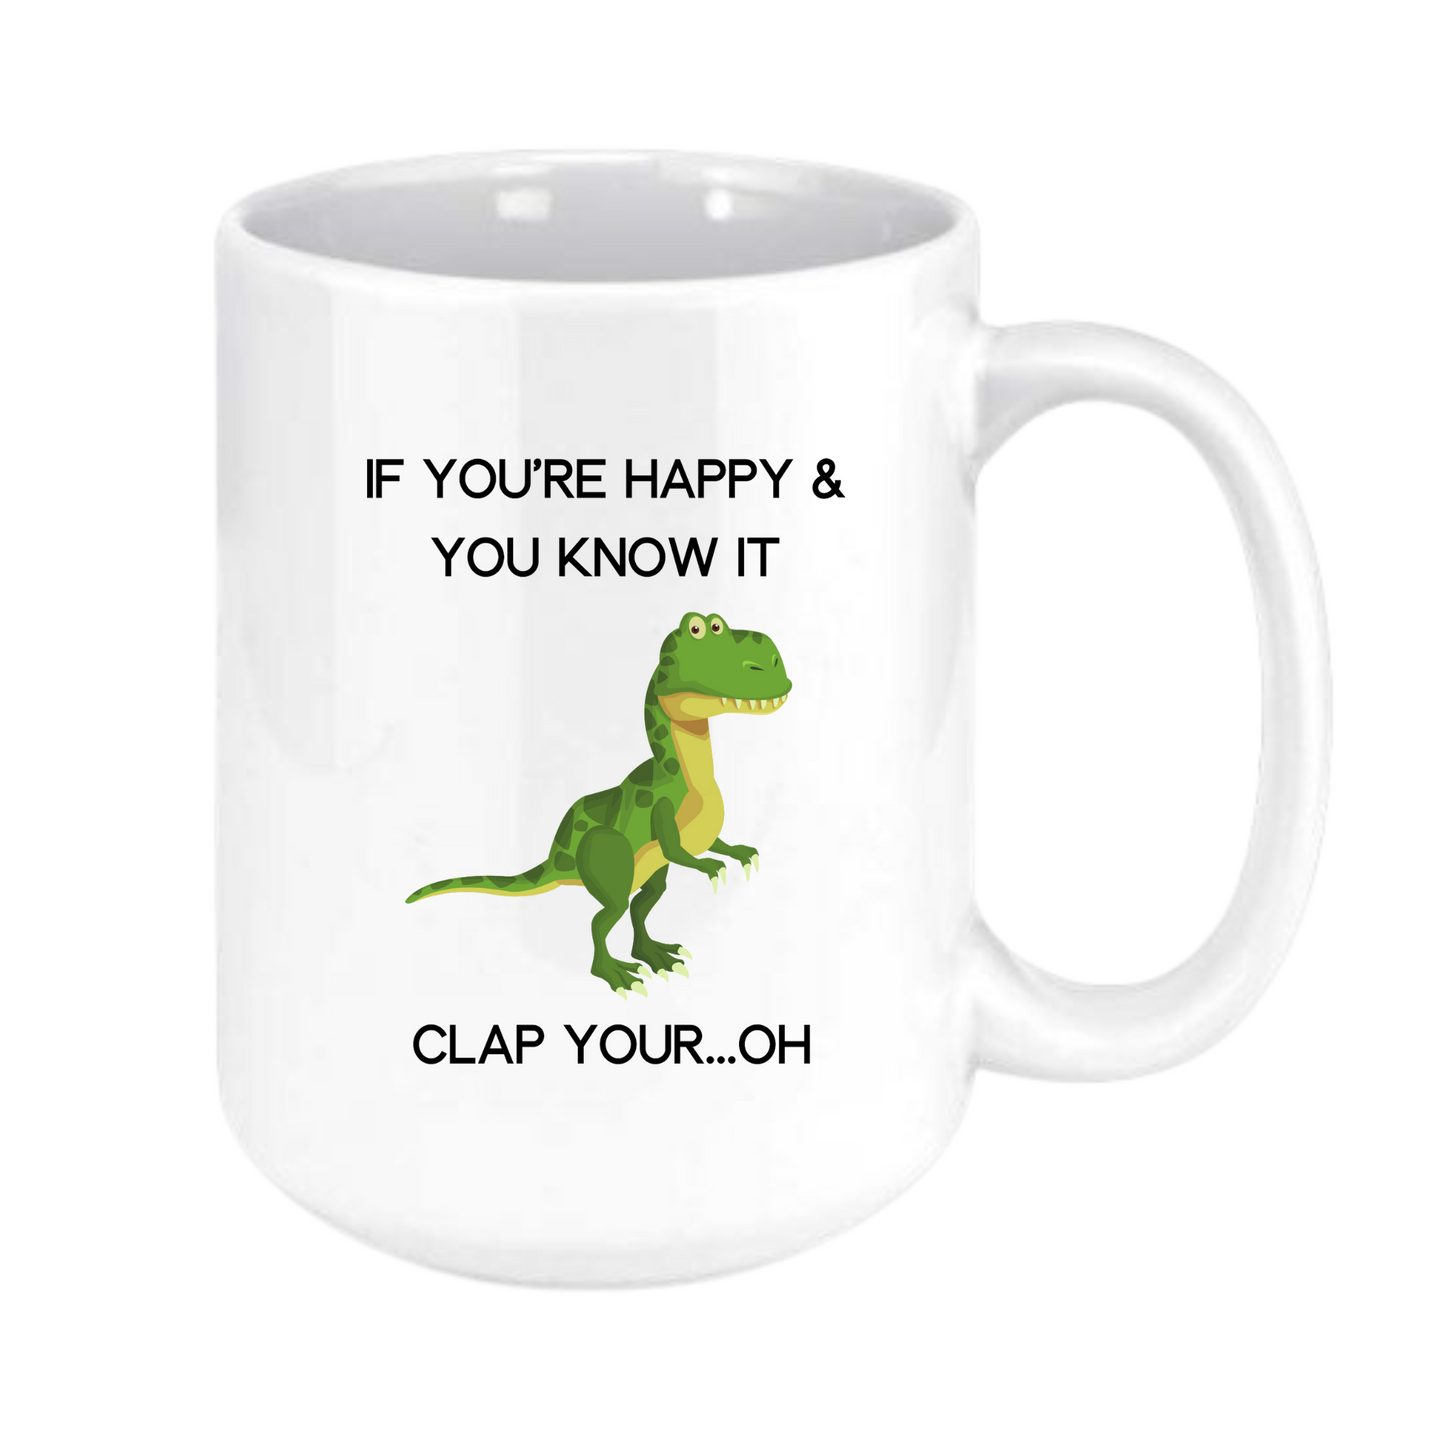 If You're Happy... mug